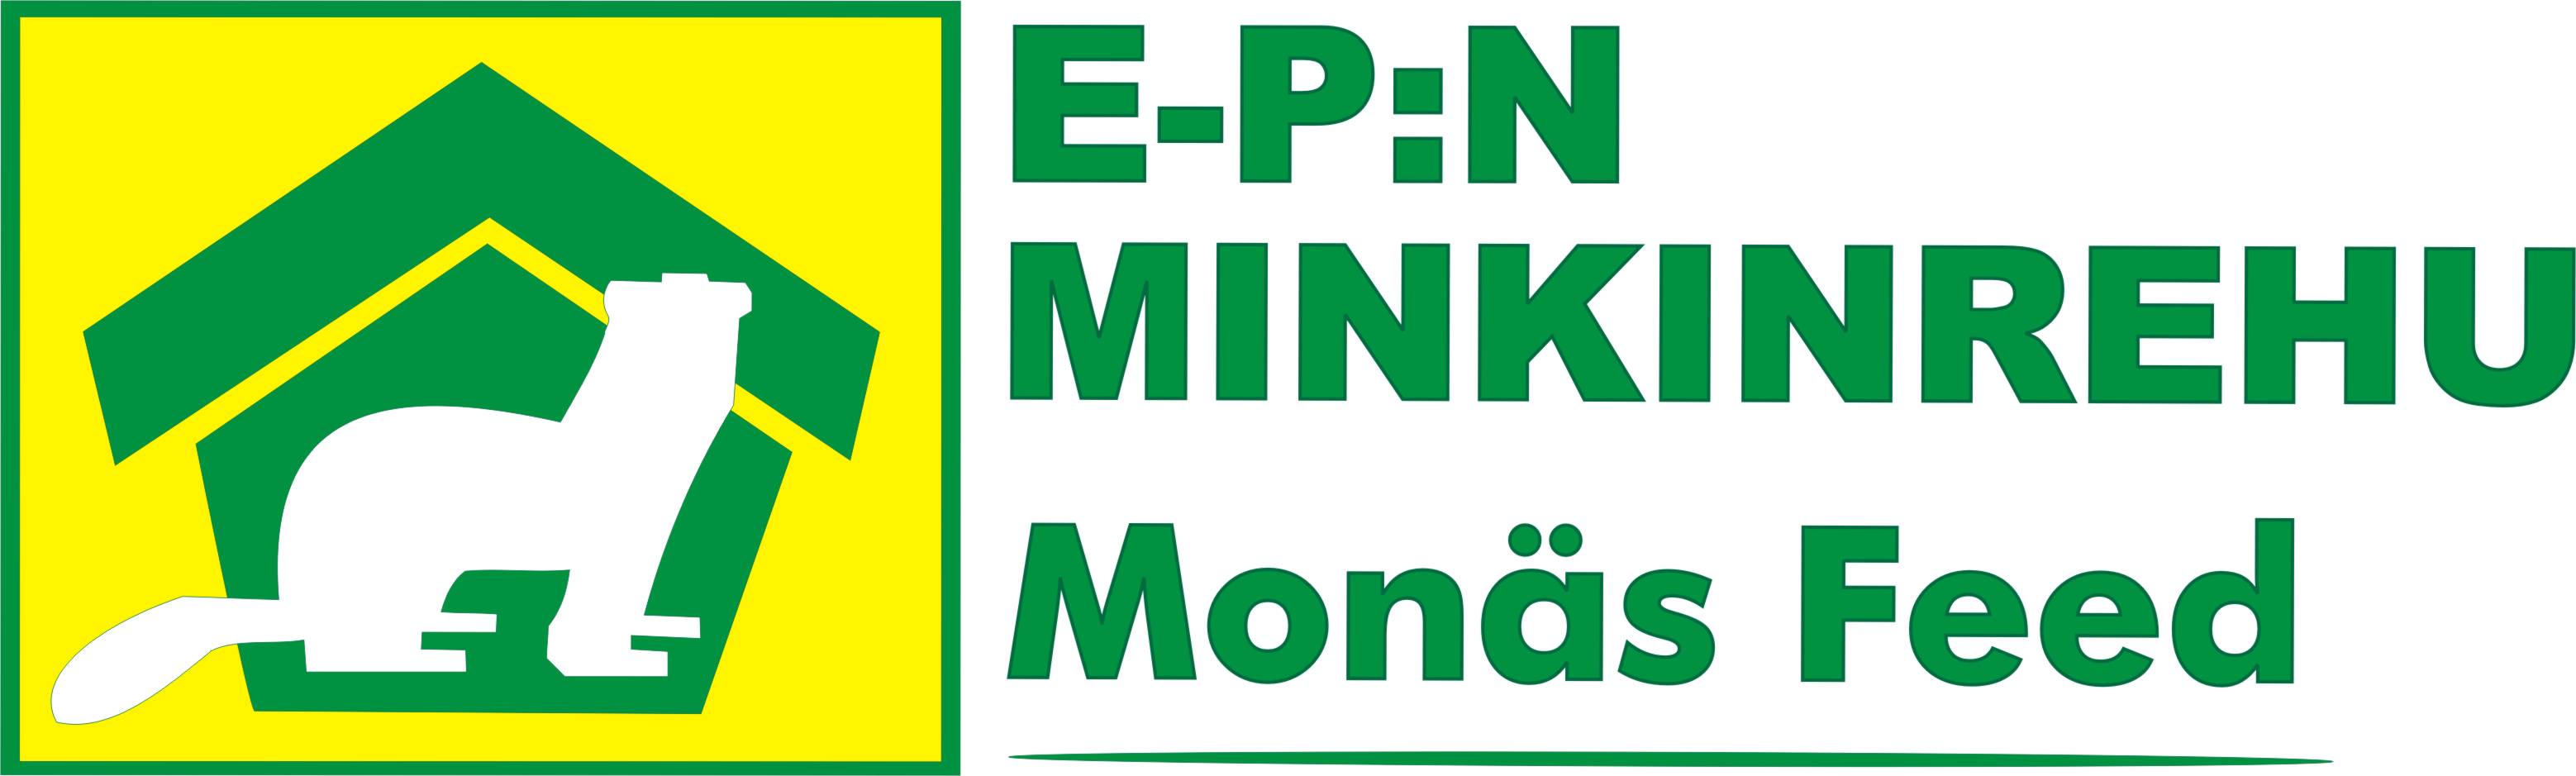 E-P:n Minkinrehu Fodder (logo)